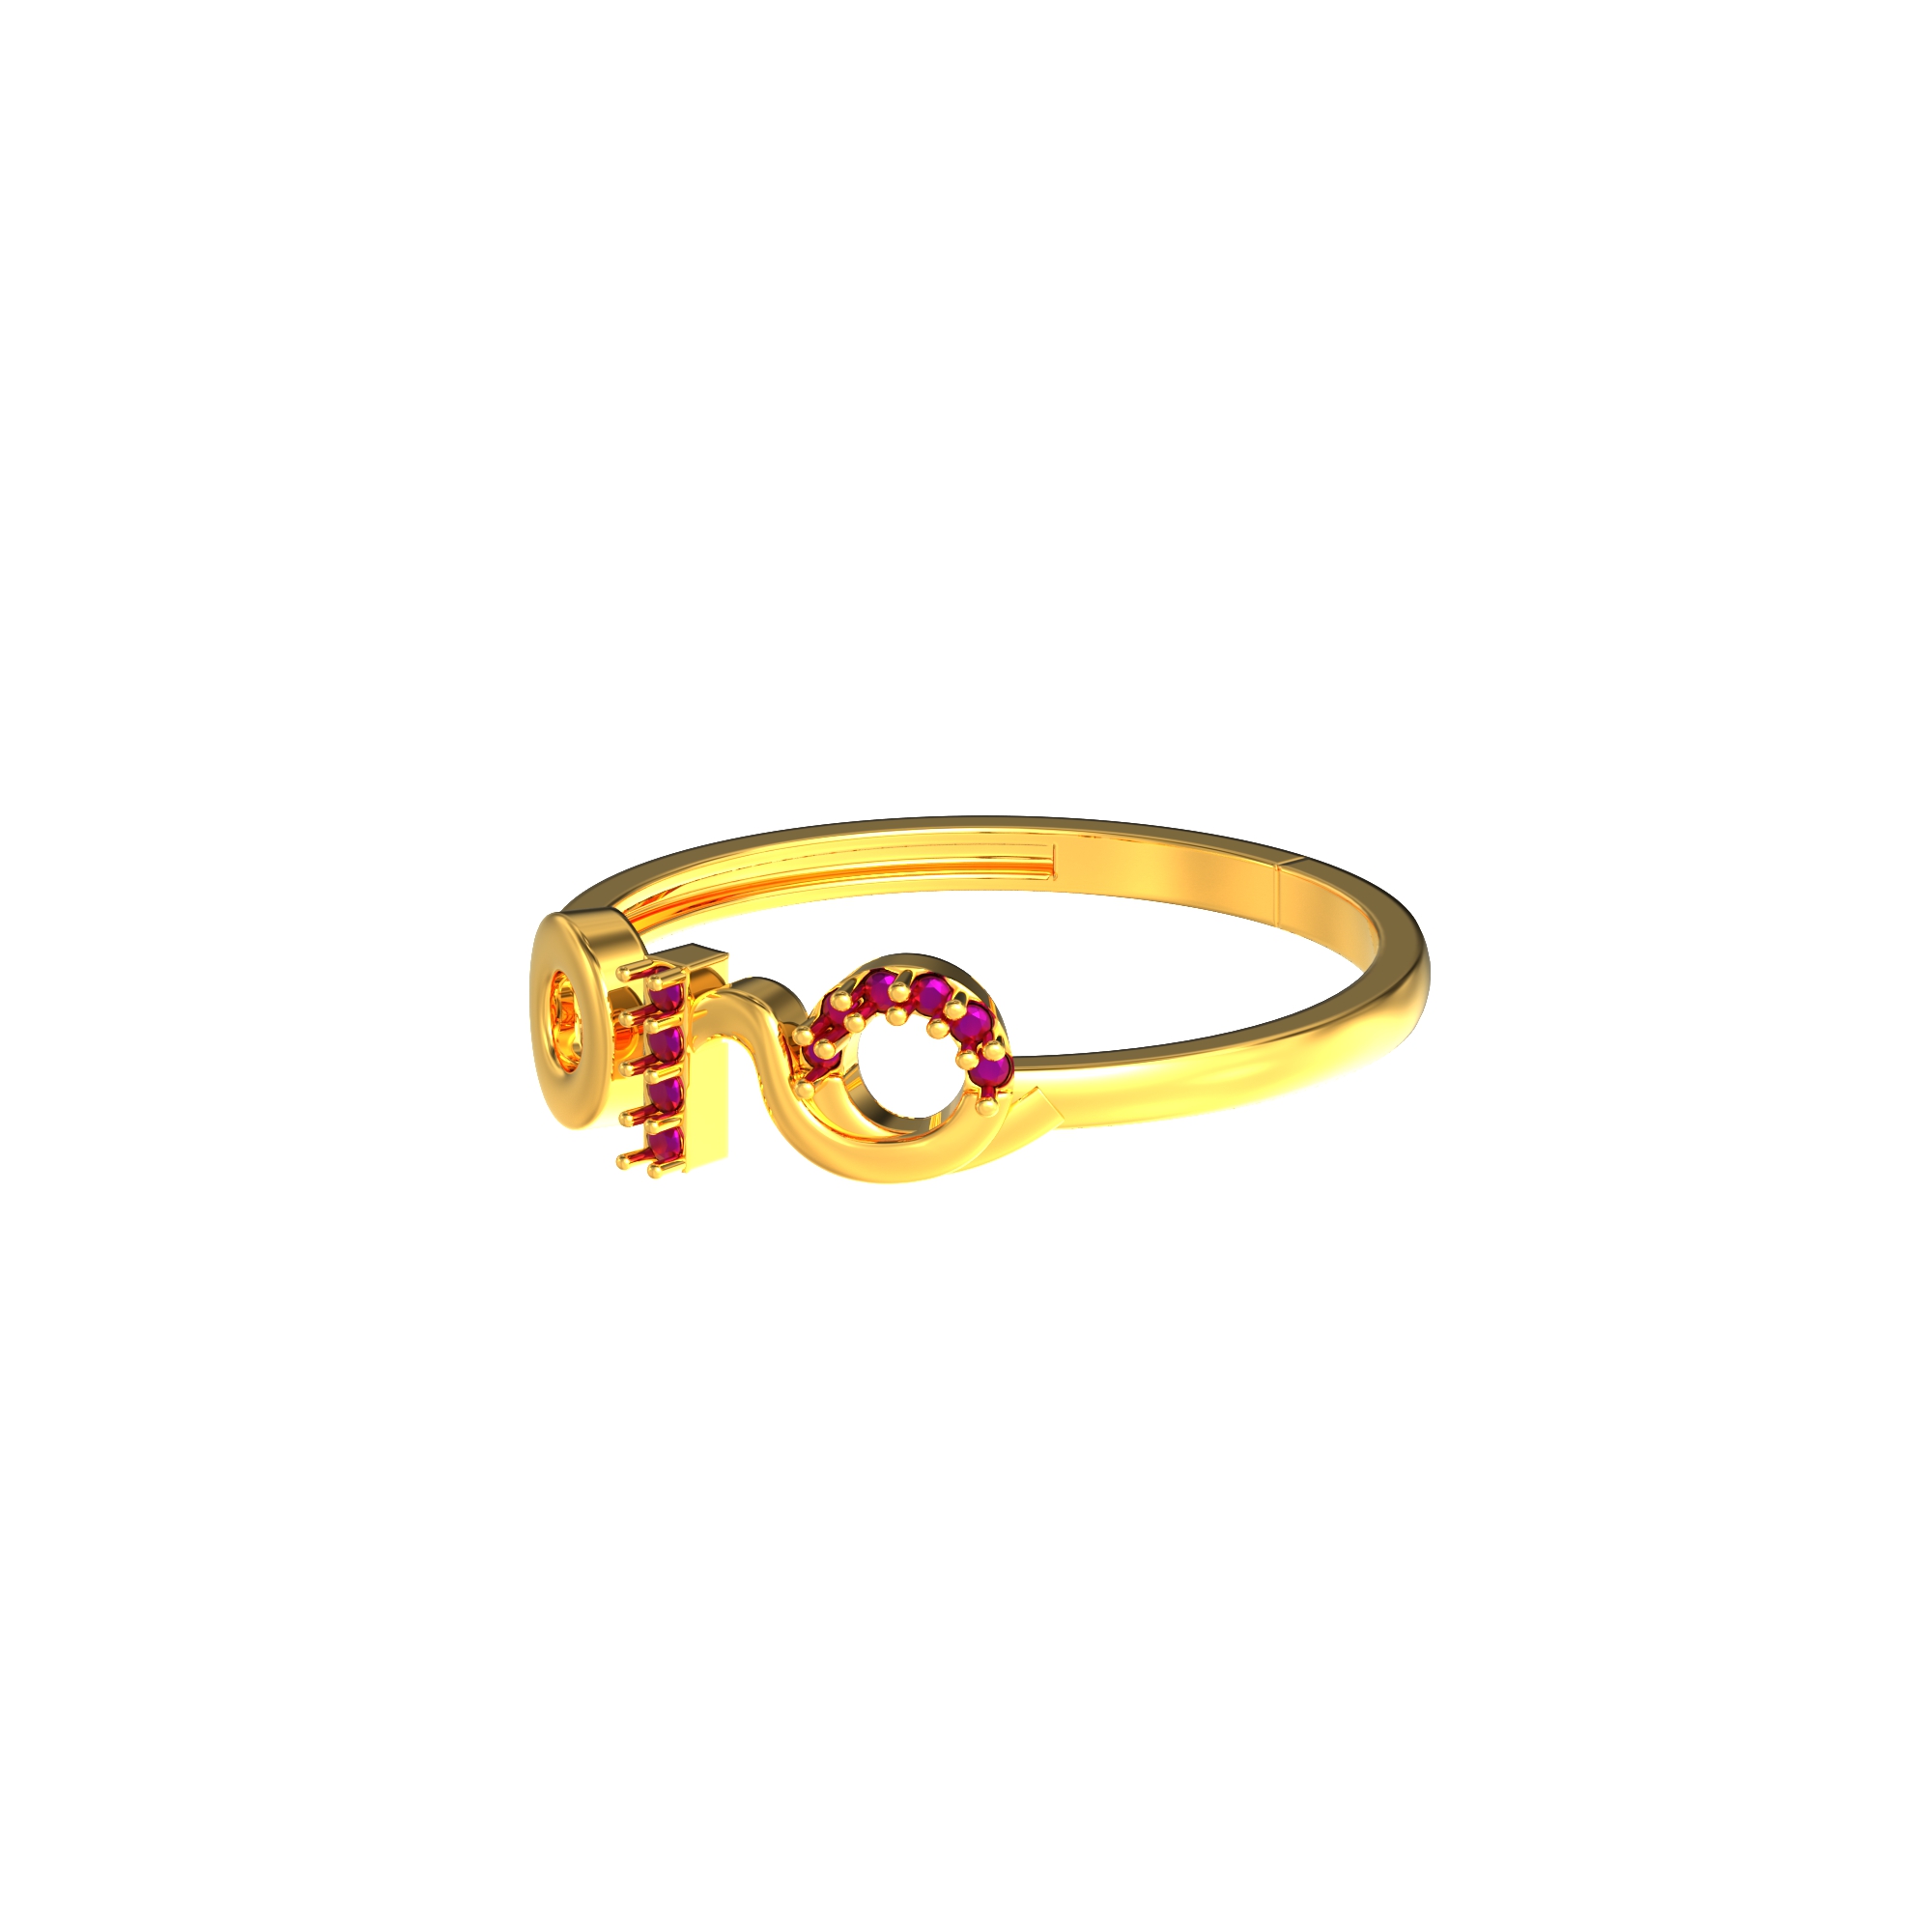 Pattern Design Gents Gold Ring